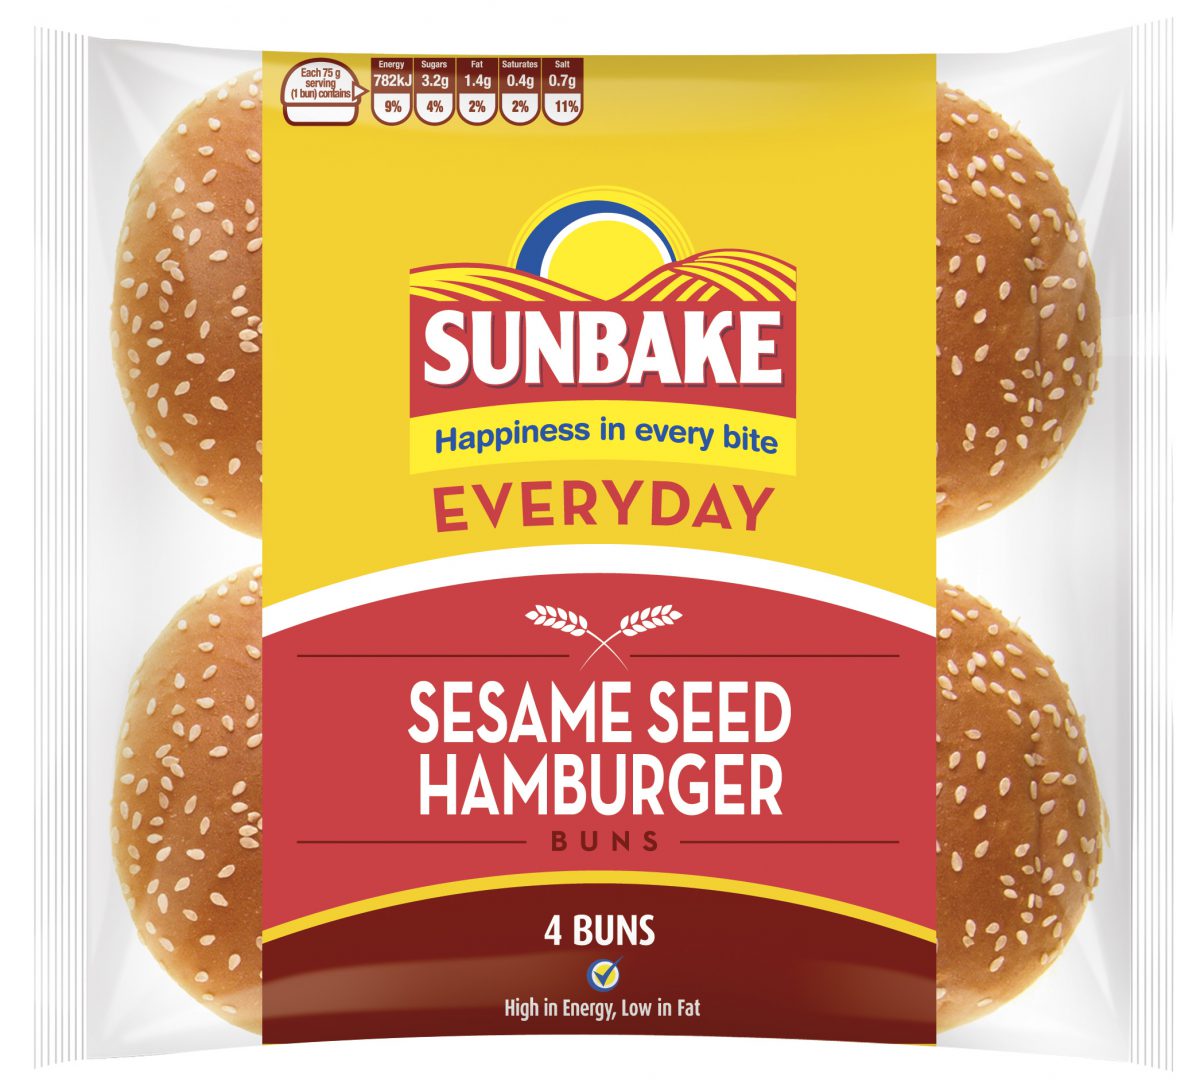 Sesame seed hamburger buns